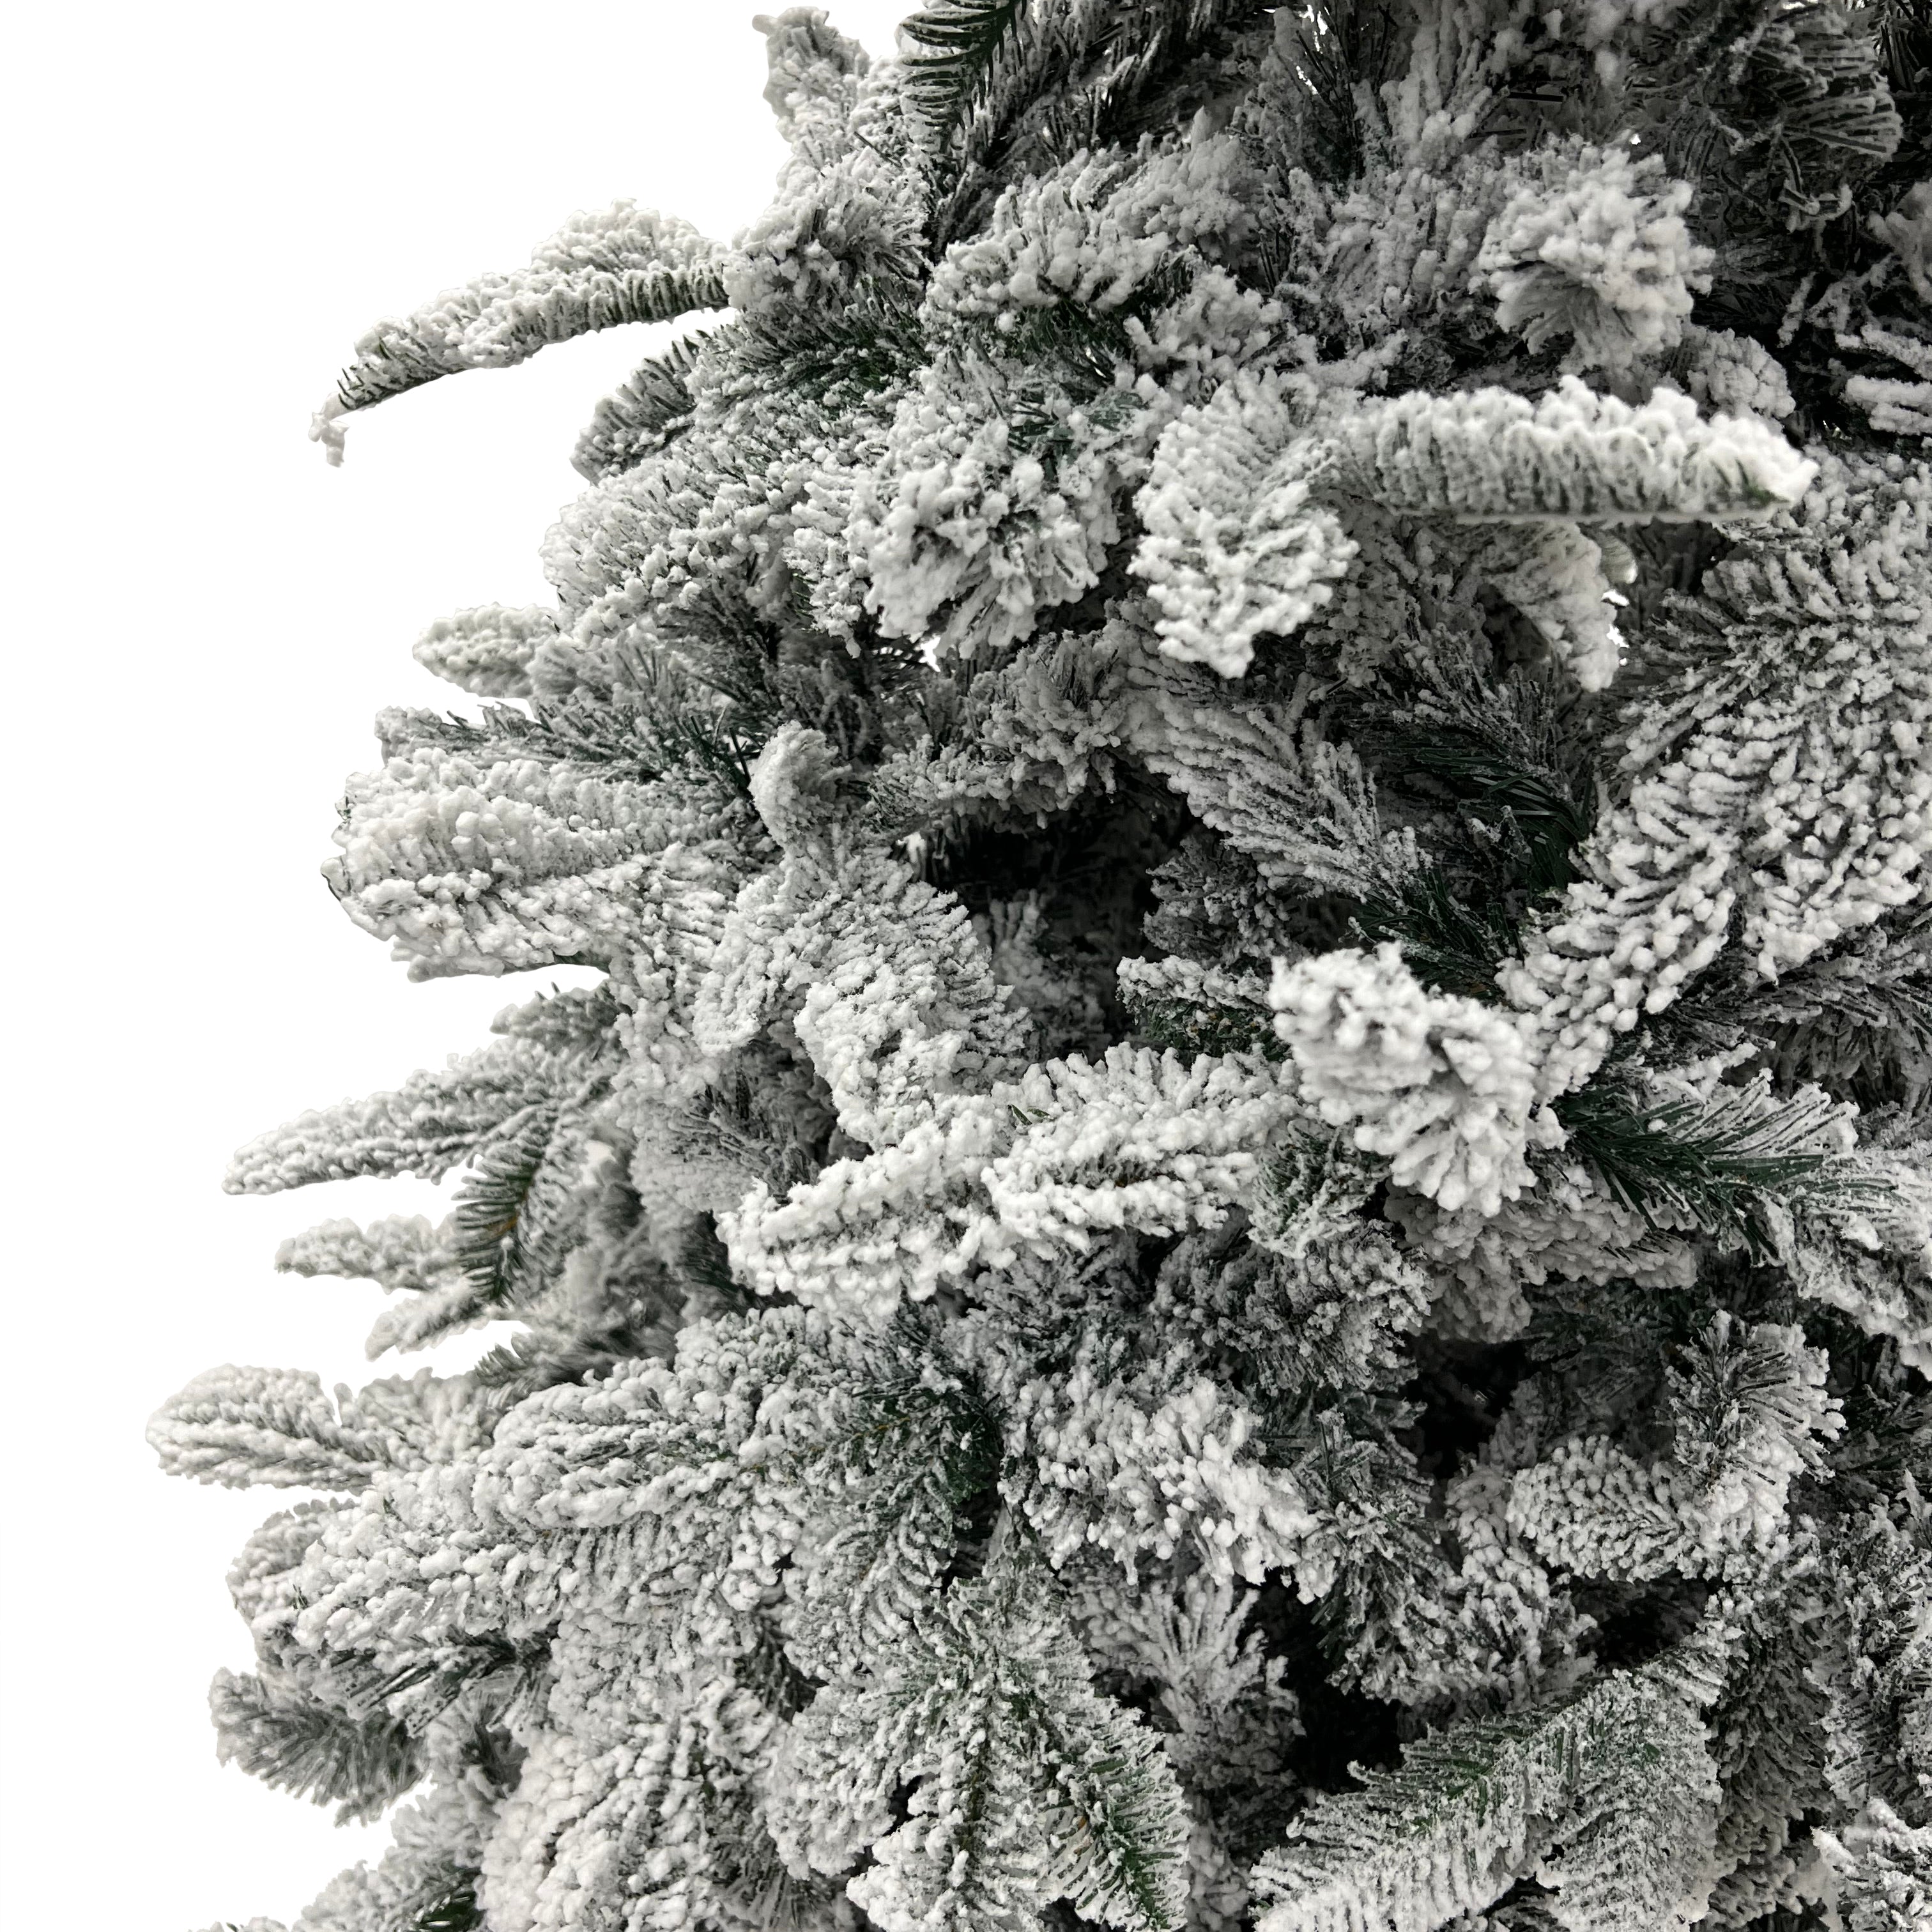 Christmas tree Excellent Trees® Otta 150 cm - Luxury version